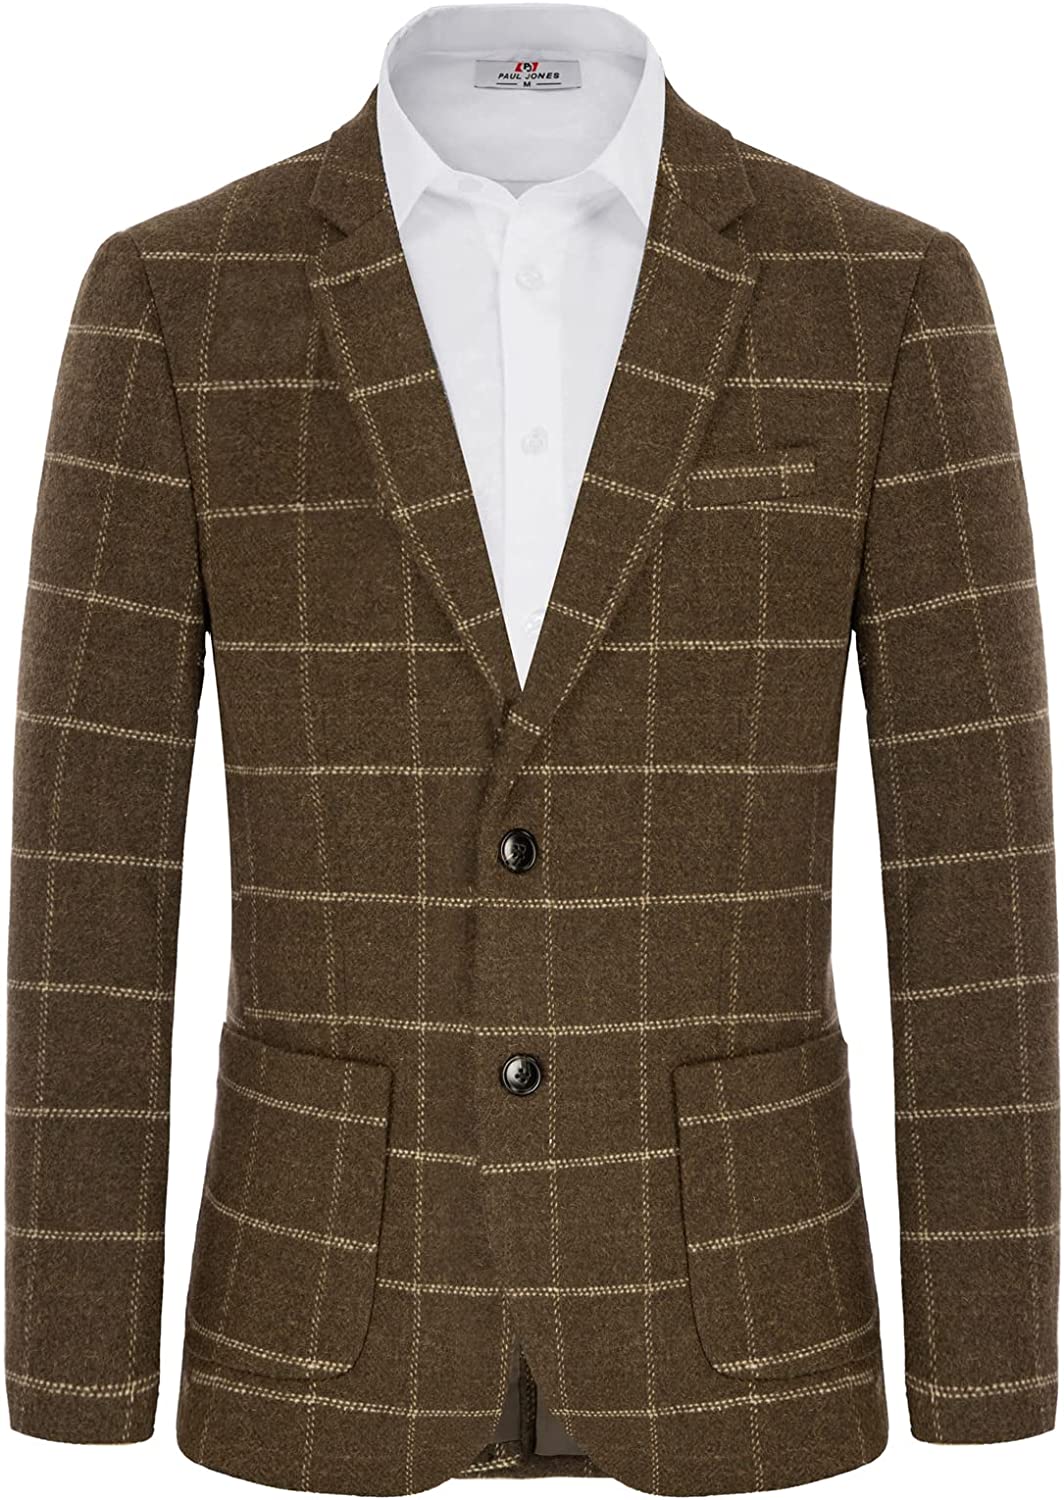 PJ PAUL JONES Men's British Tweed Suit Blazer Premium Wool Blend